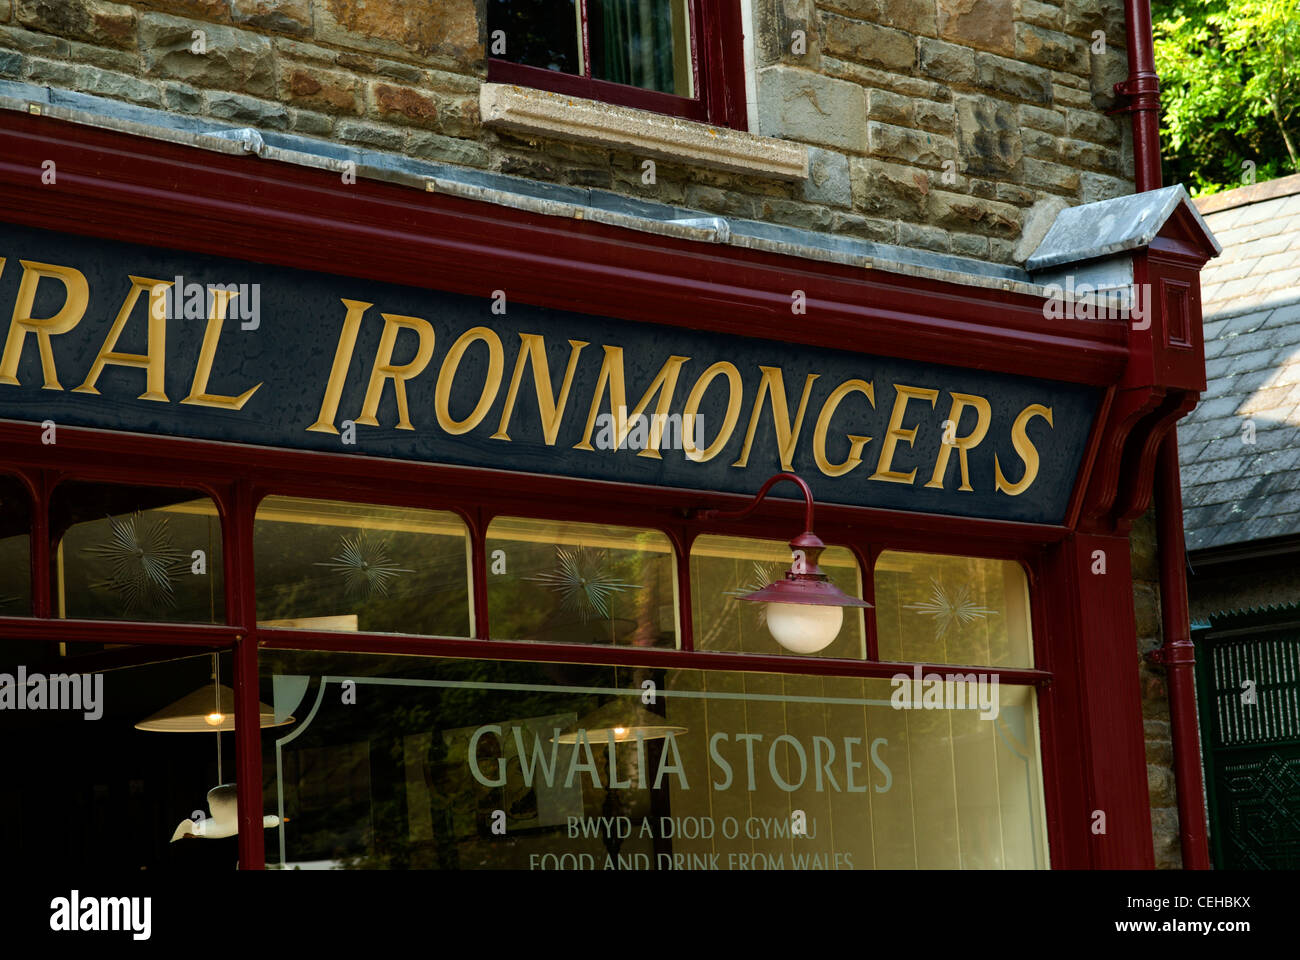 Ironmonger's shop Gwalia Store, St Fagans National History Museum/Amgueddfa Werin Cymru, Cardiff, South Wales, UK. Stock Photo